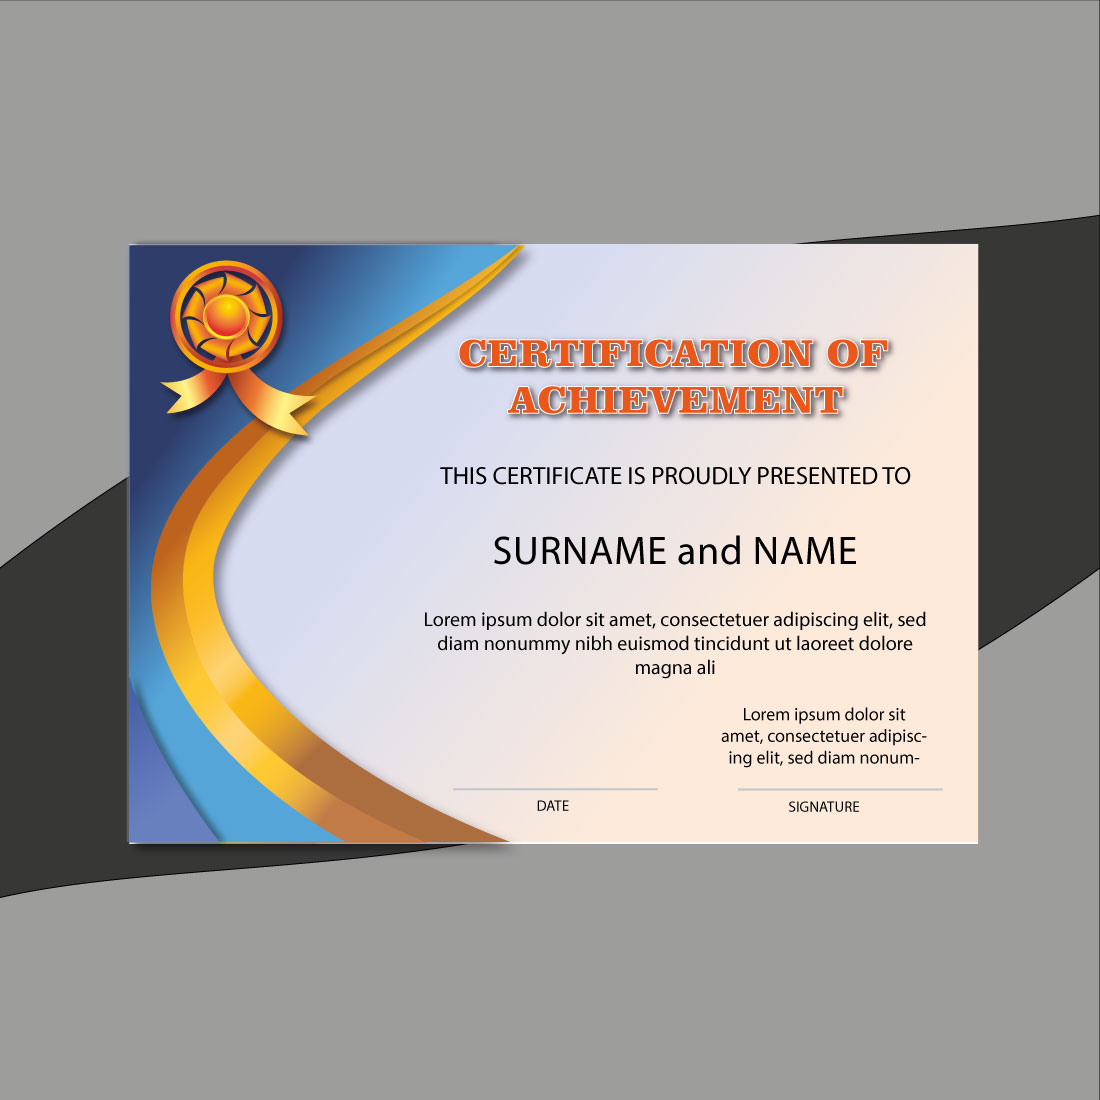 Certification of Achievement Design cover image.